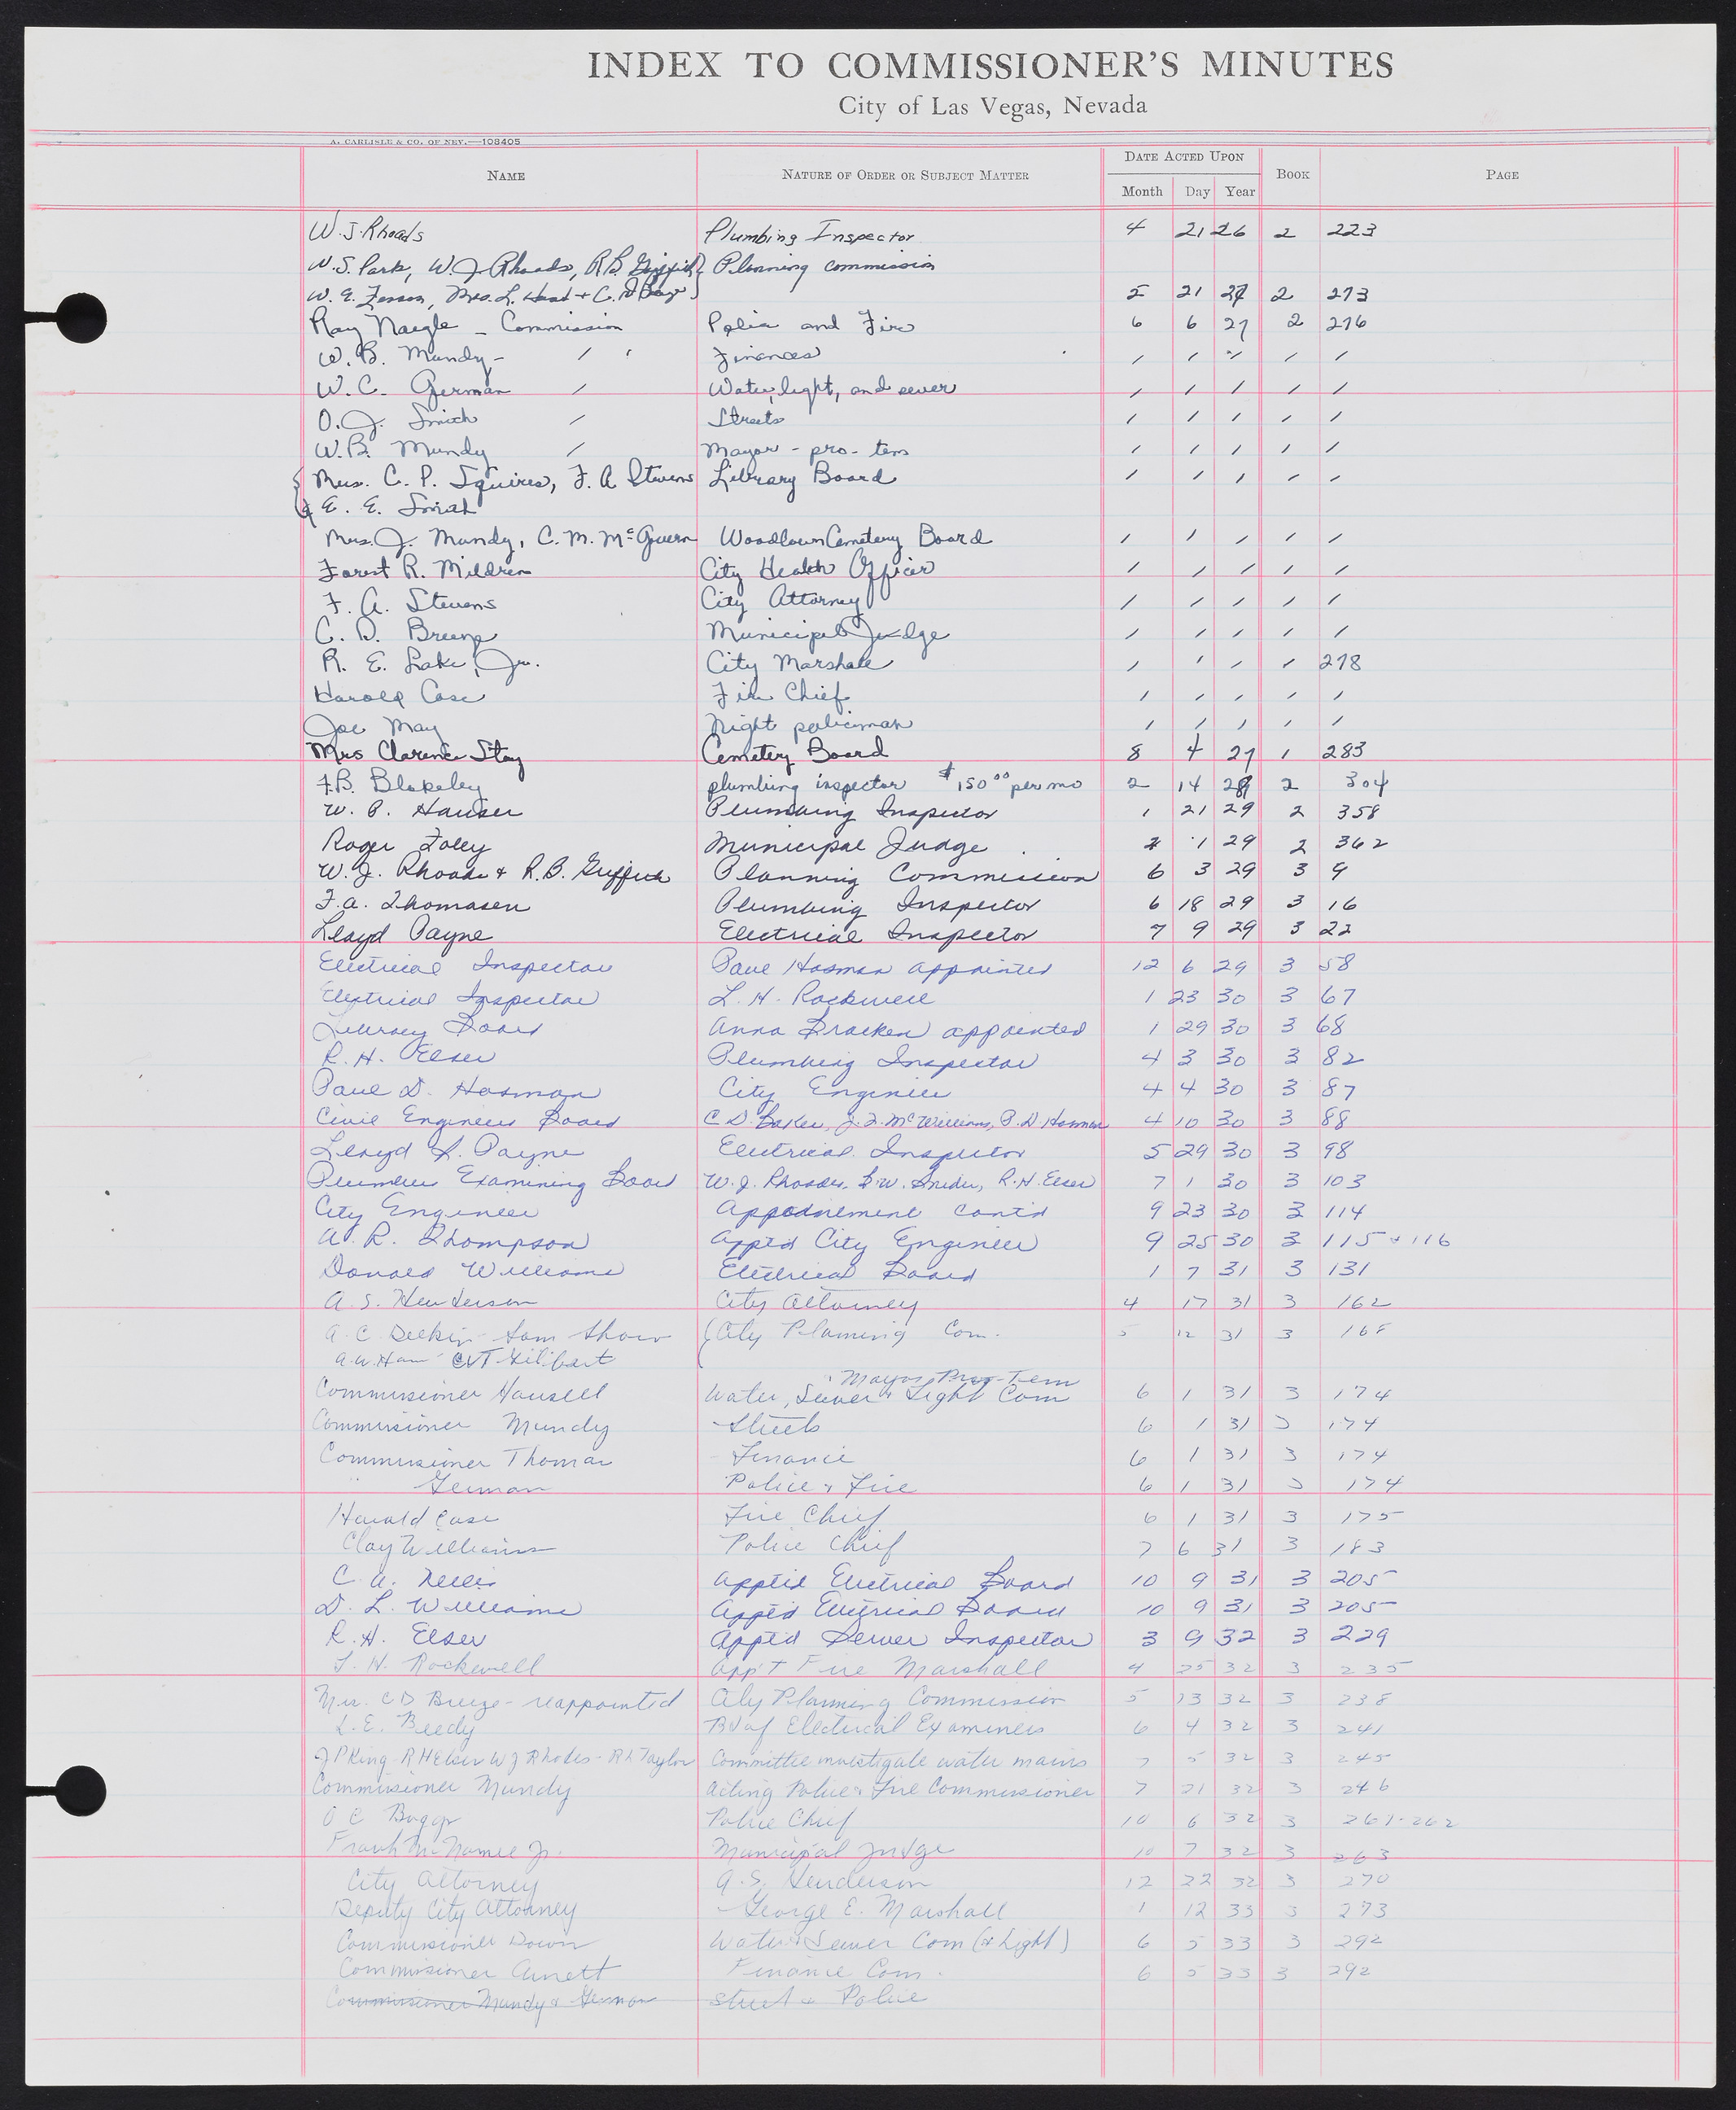 Las Vegas City Commission Minutes Index 1, 1911-1960: documents, item 018